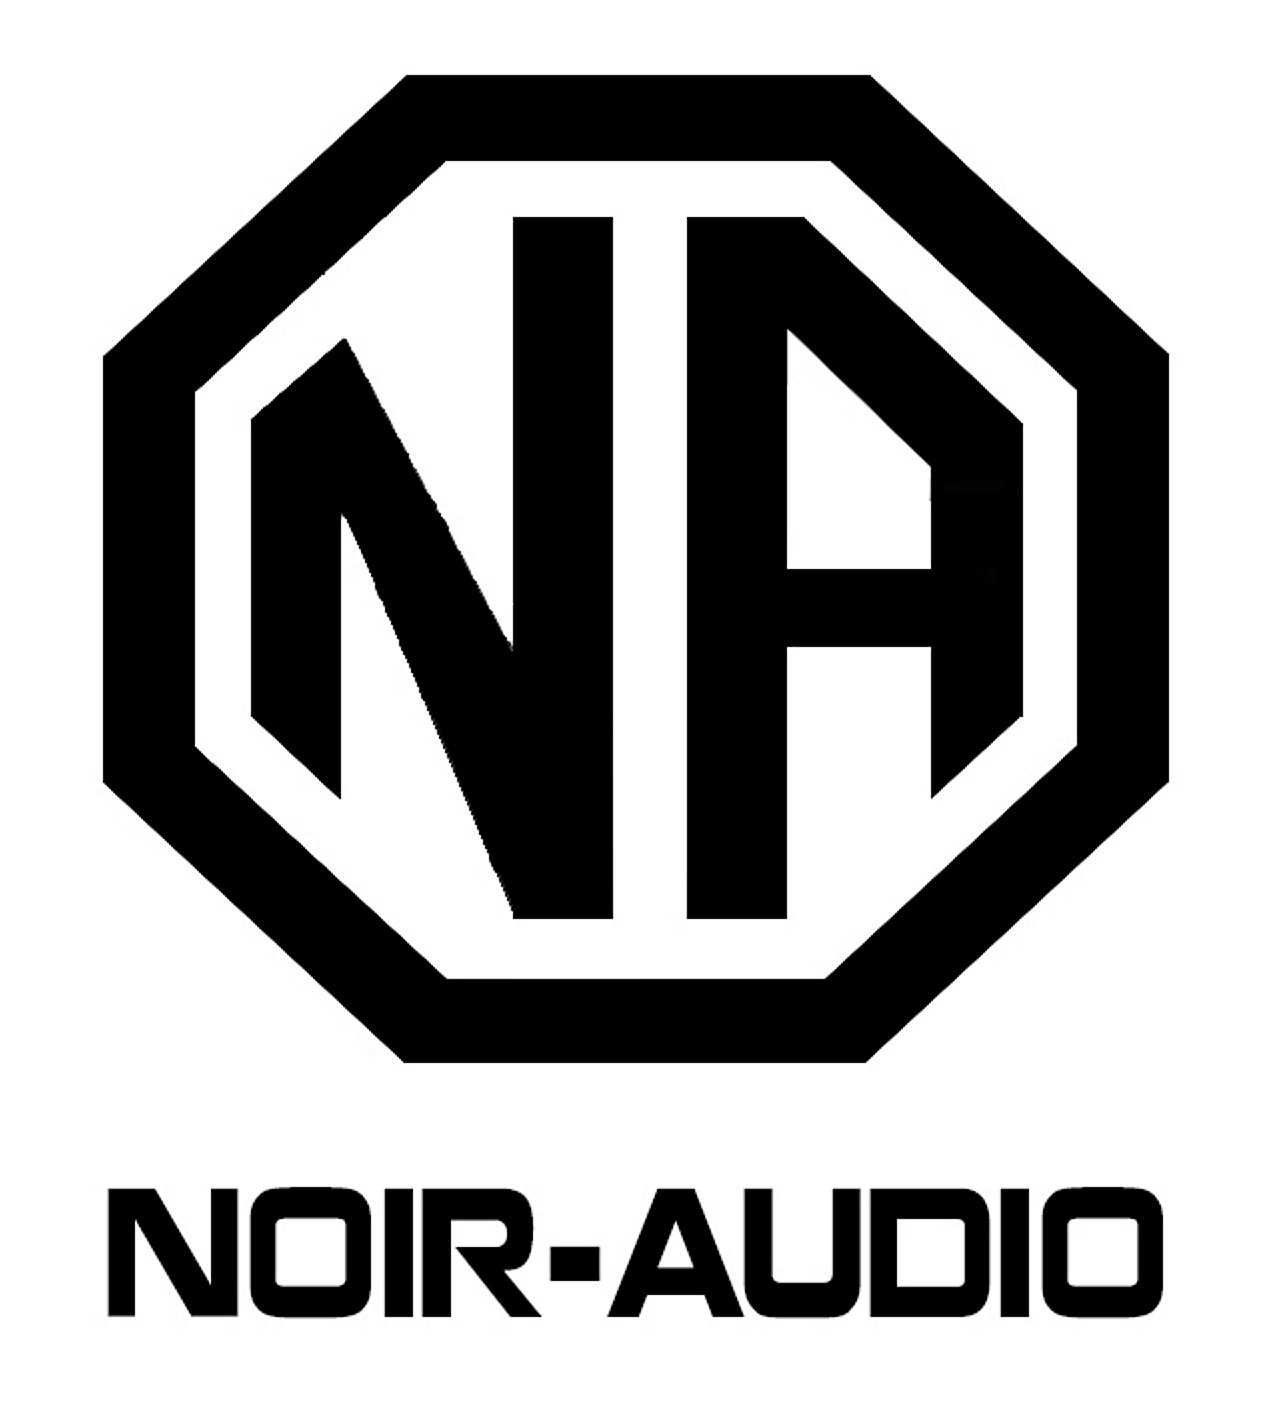 NOIR-audio